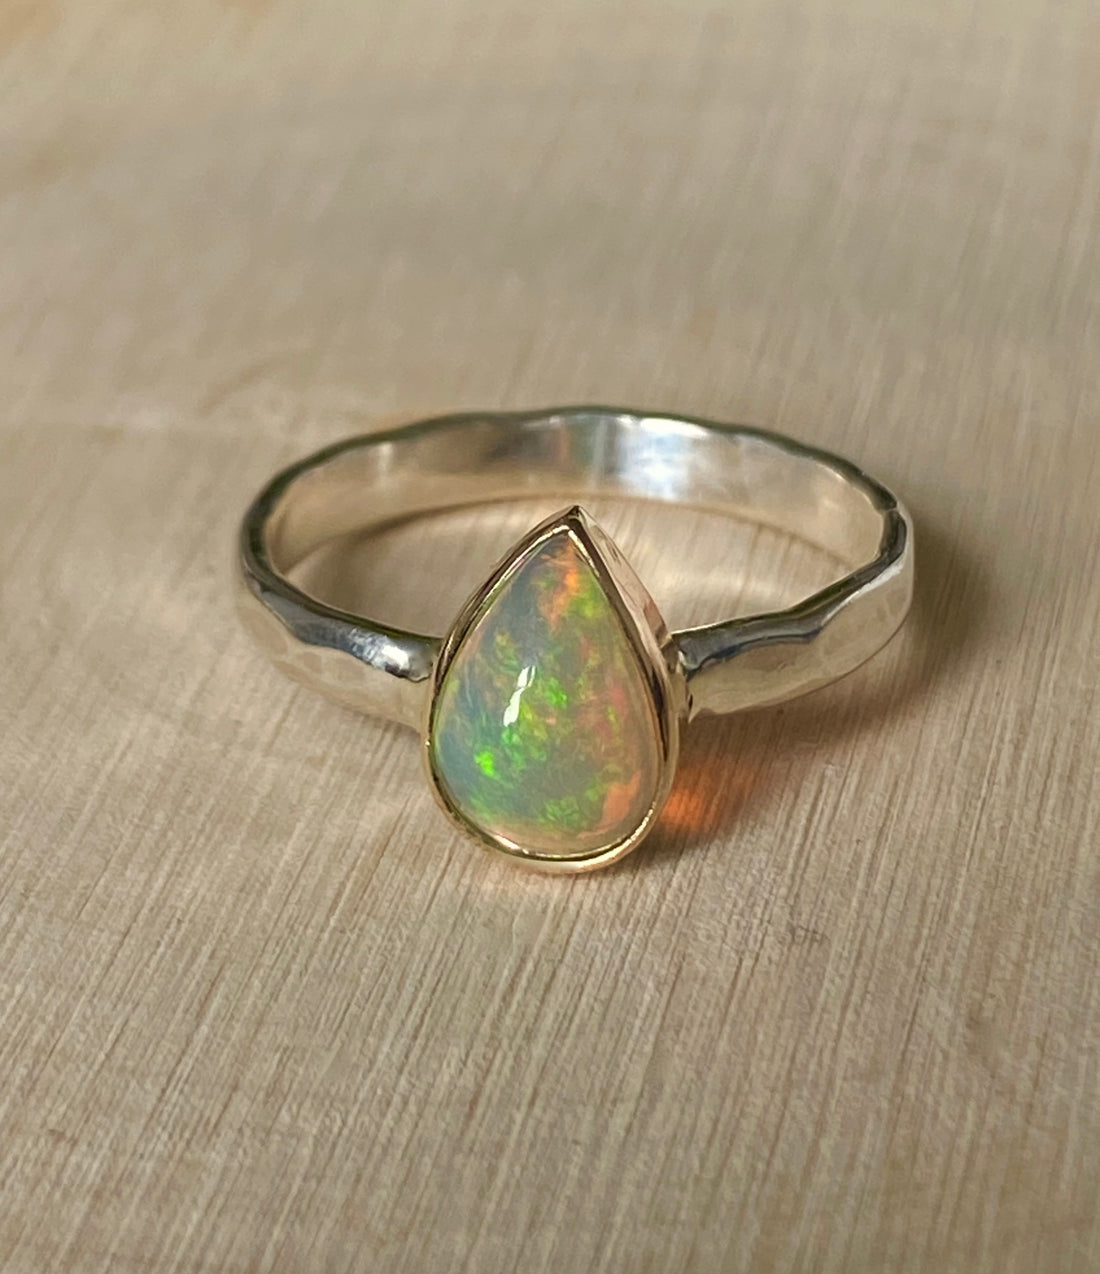 Ethiopian Welo Opal Ring, Alternative Wedding or Engagement Ring